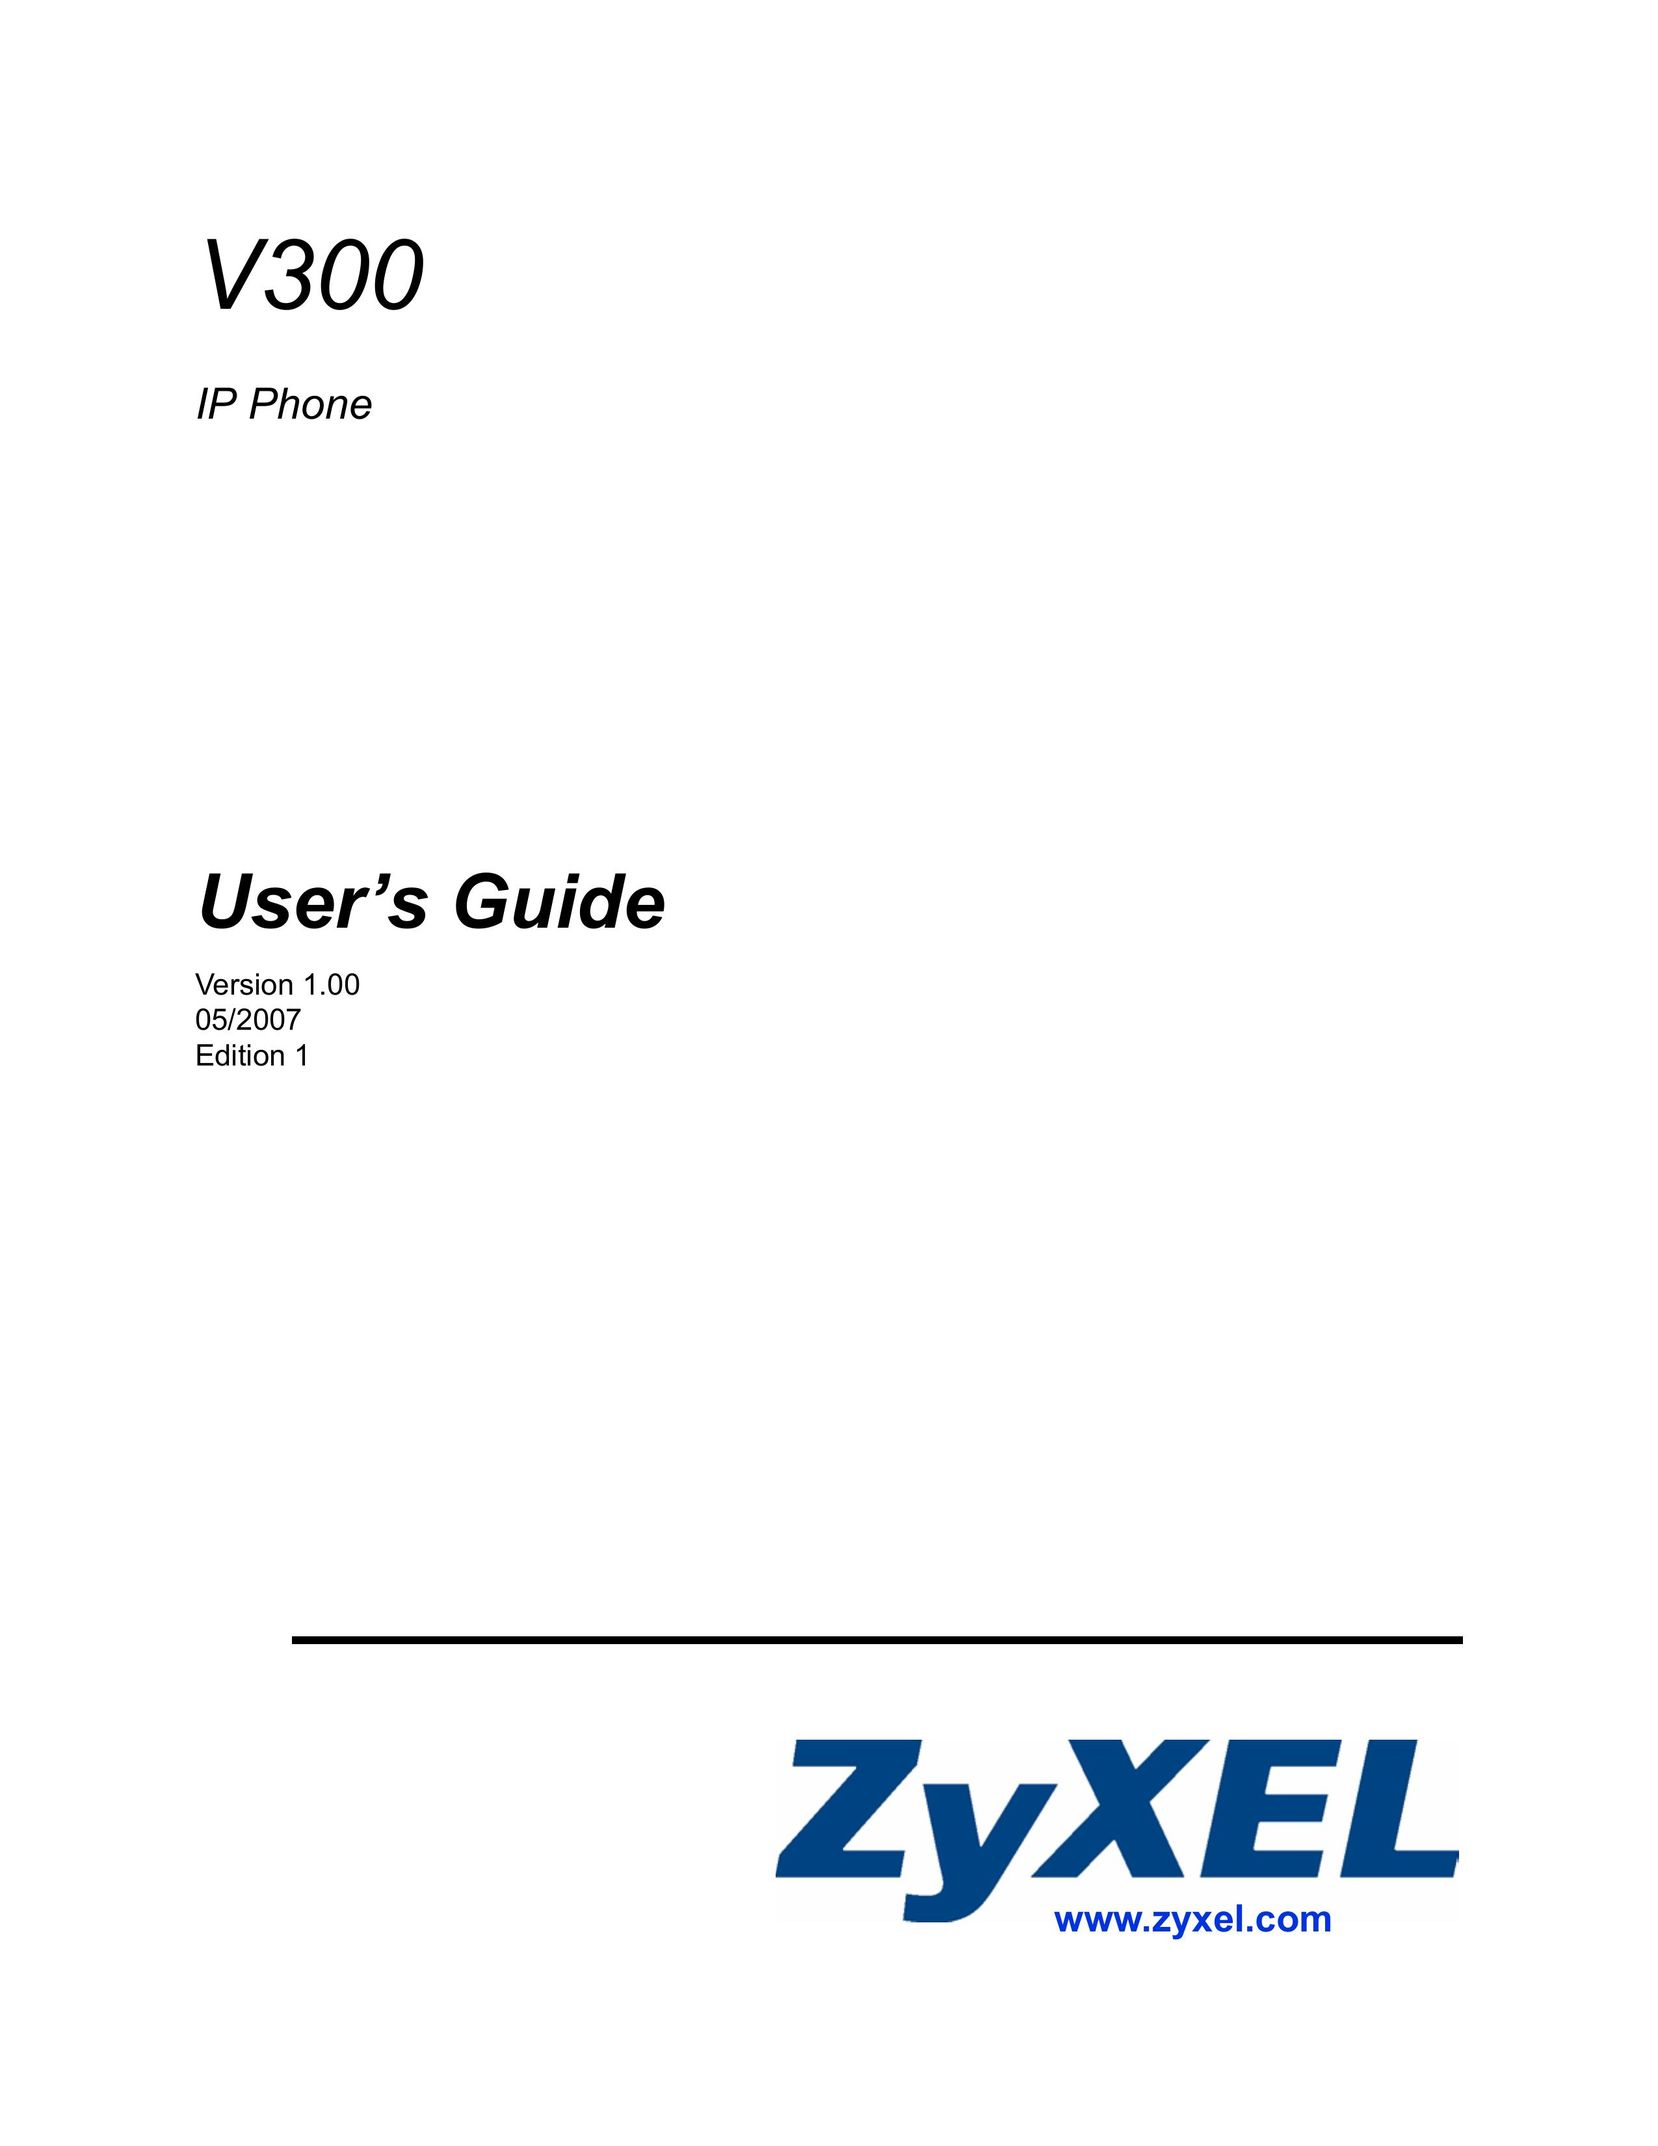 ZyXEL Communications V300 IP Phone User Manual